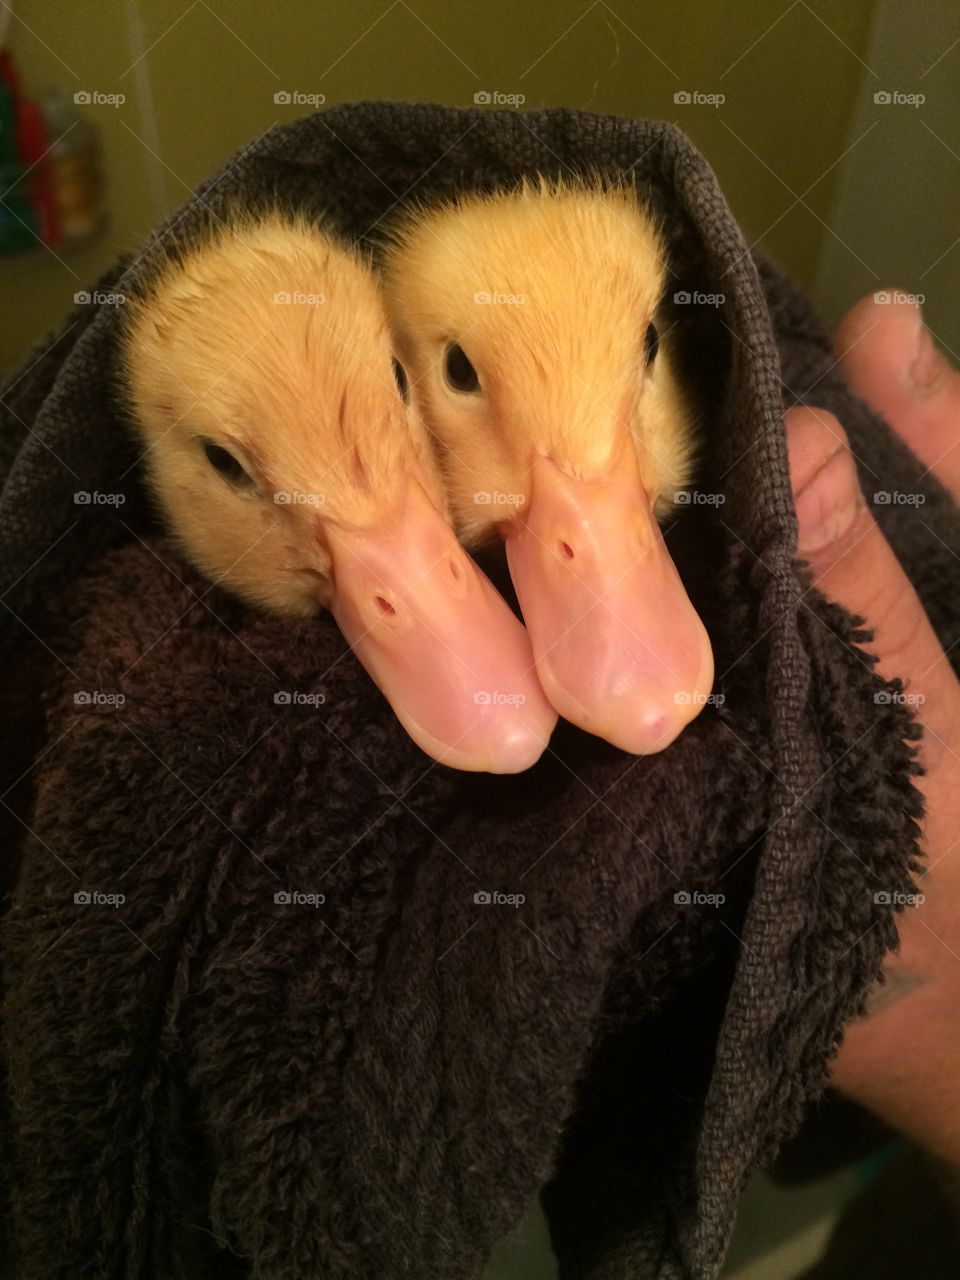 Baby ducks
